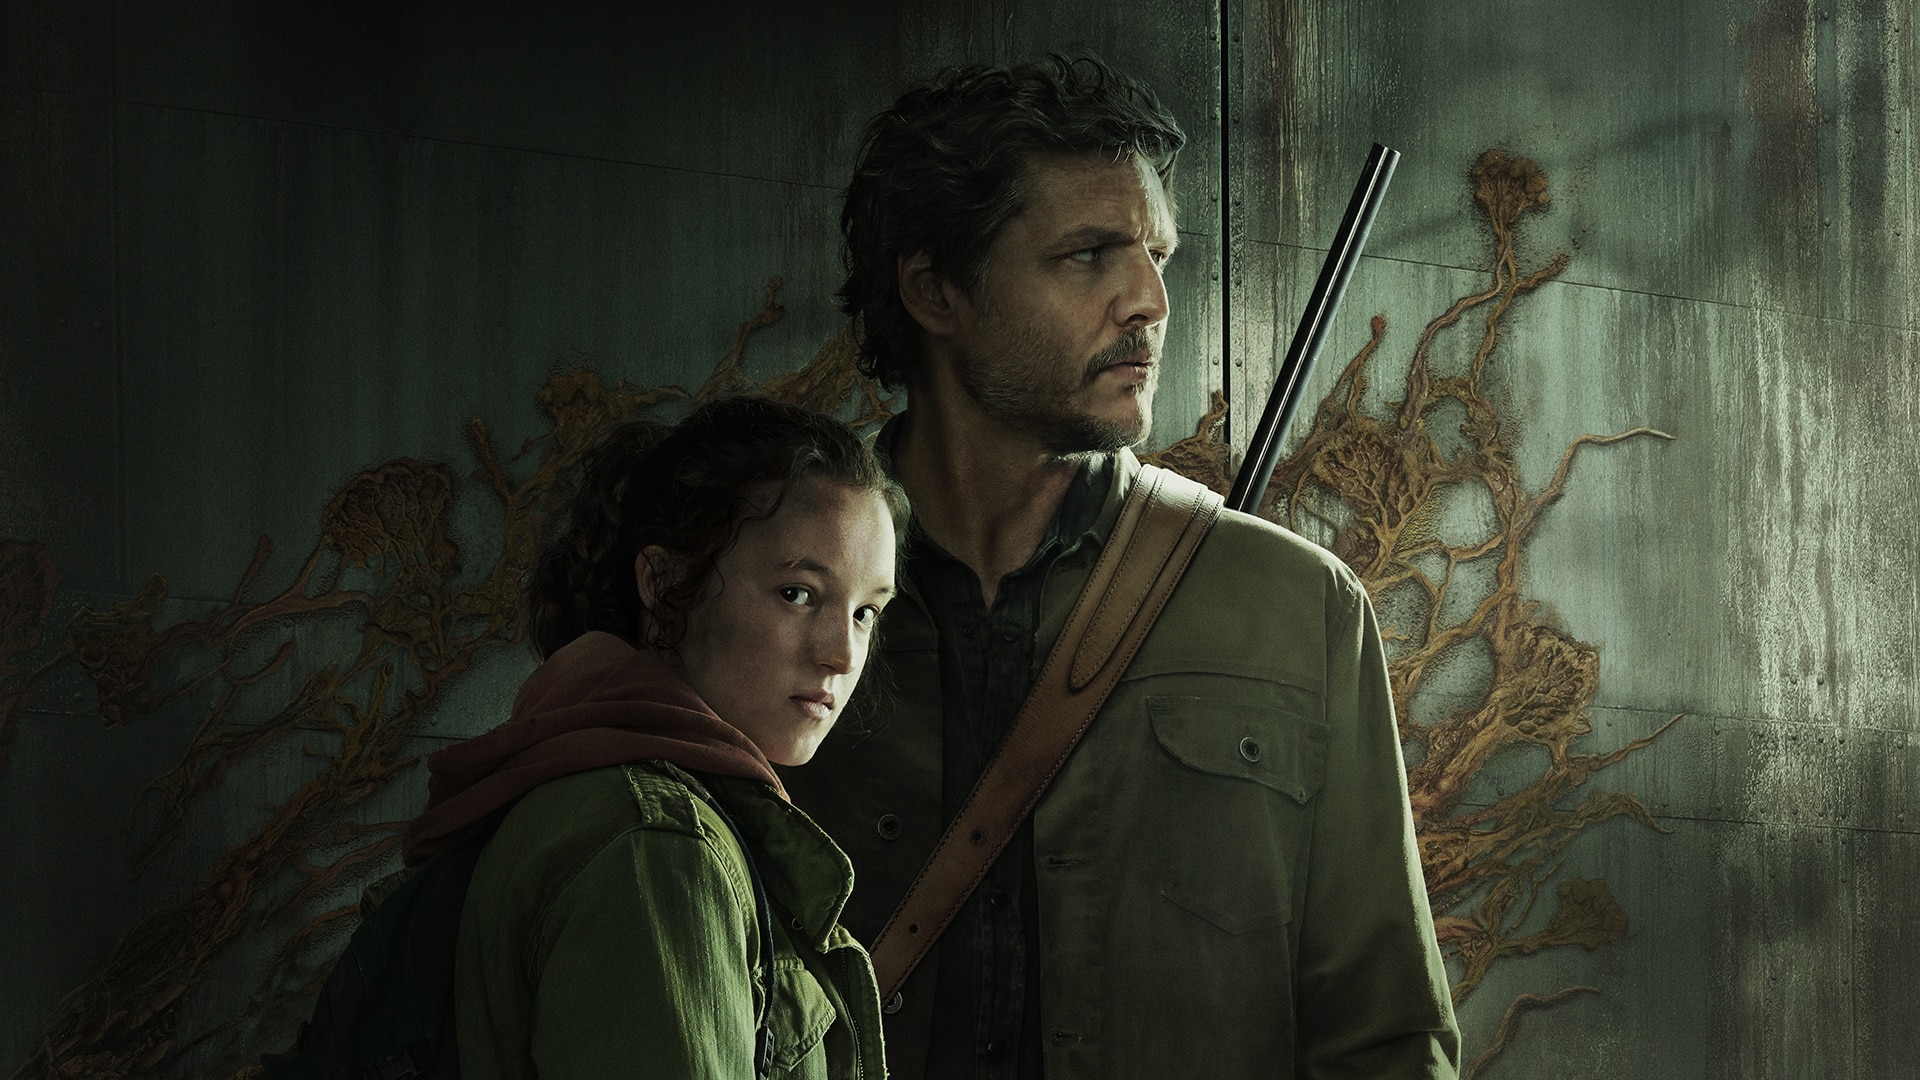 HD wallpaper: The Last of Us, Chernobyl, Naughty Dog, HBO, PlayStation